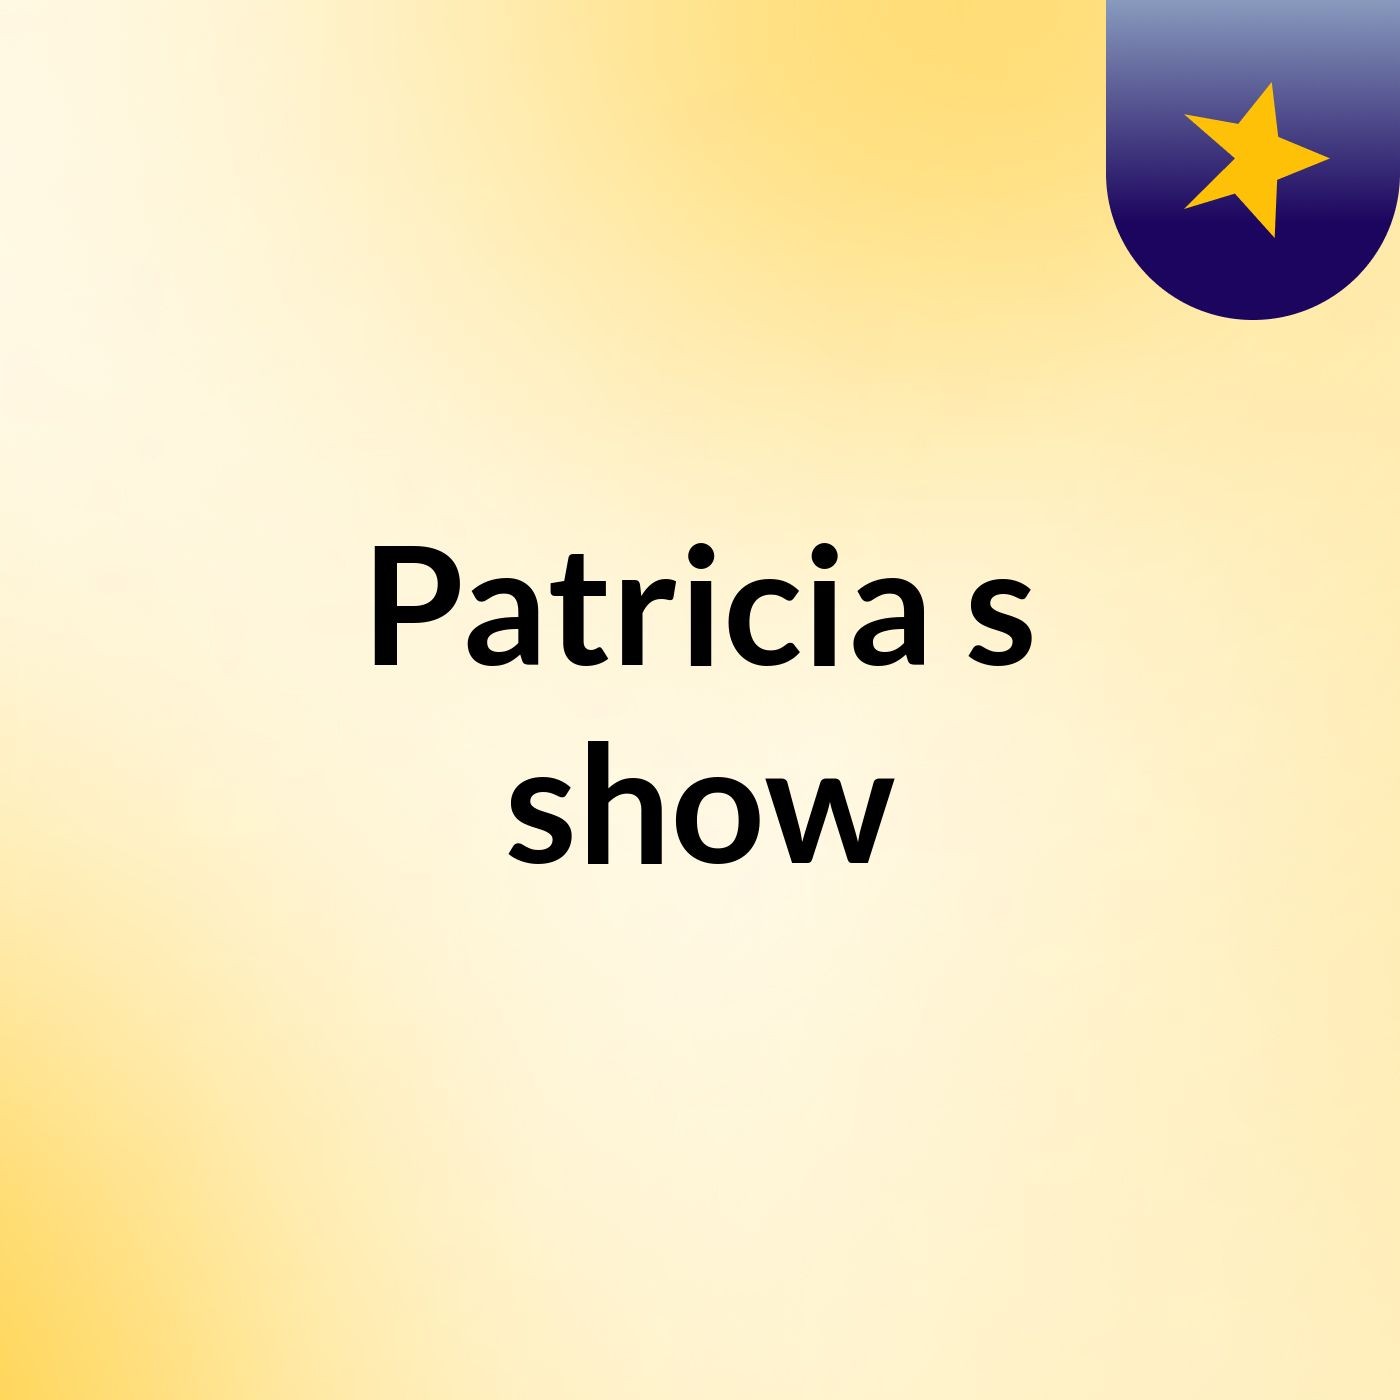 Patricia's show